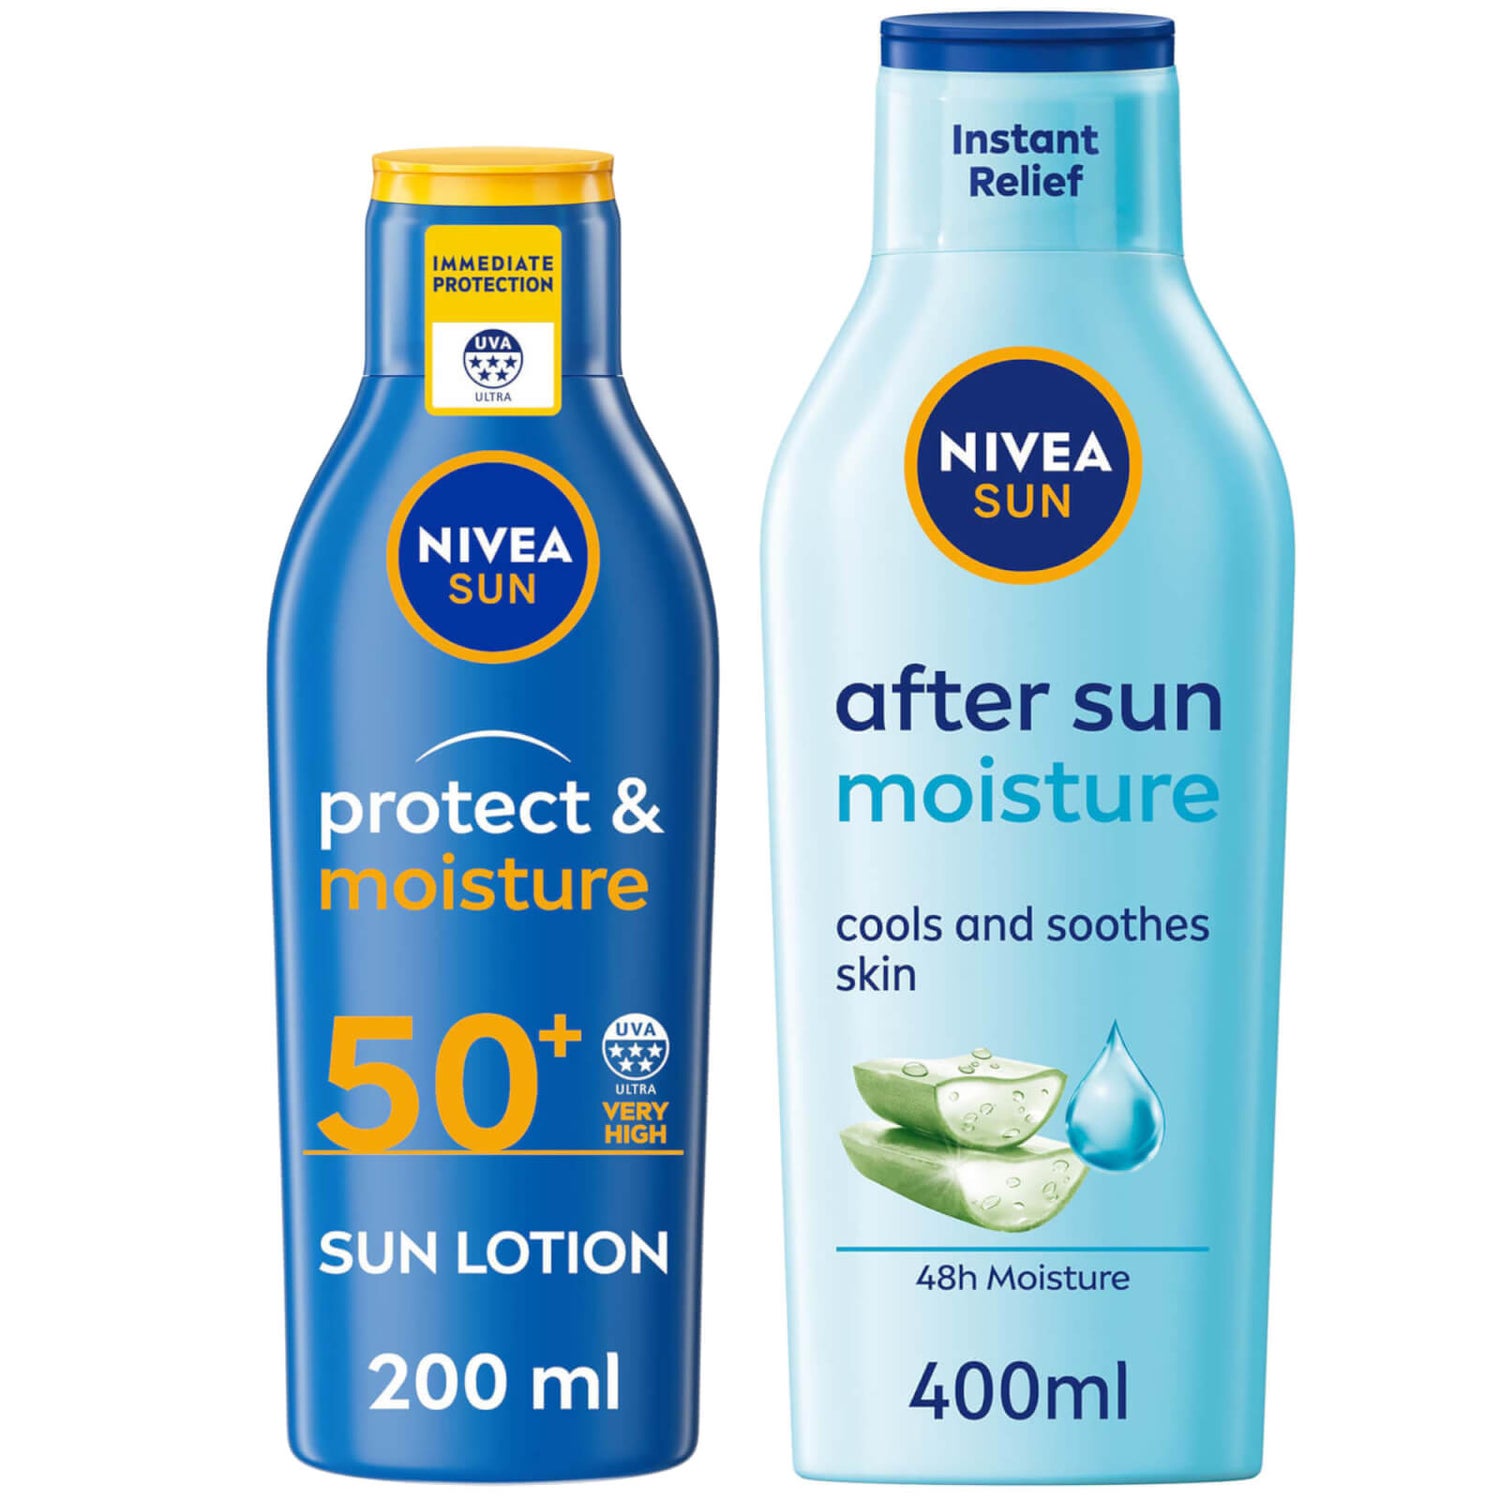 NIVEA SUN Protect and Moisture Sun Cream and Aftersun Duo